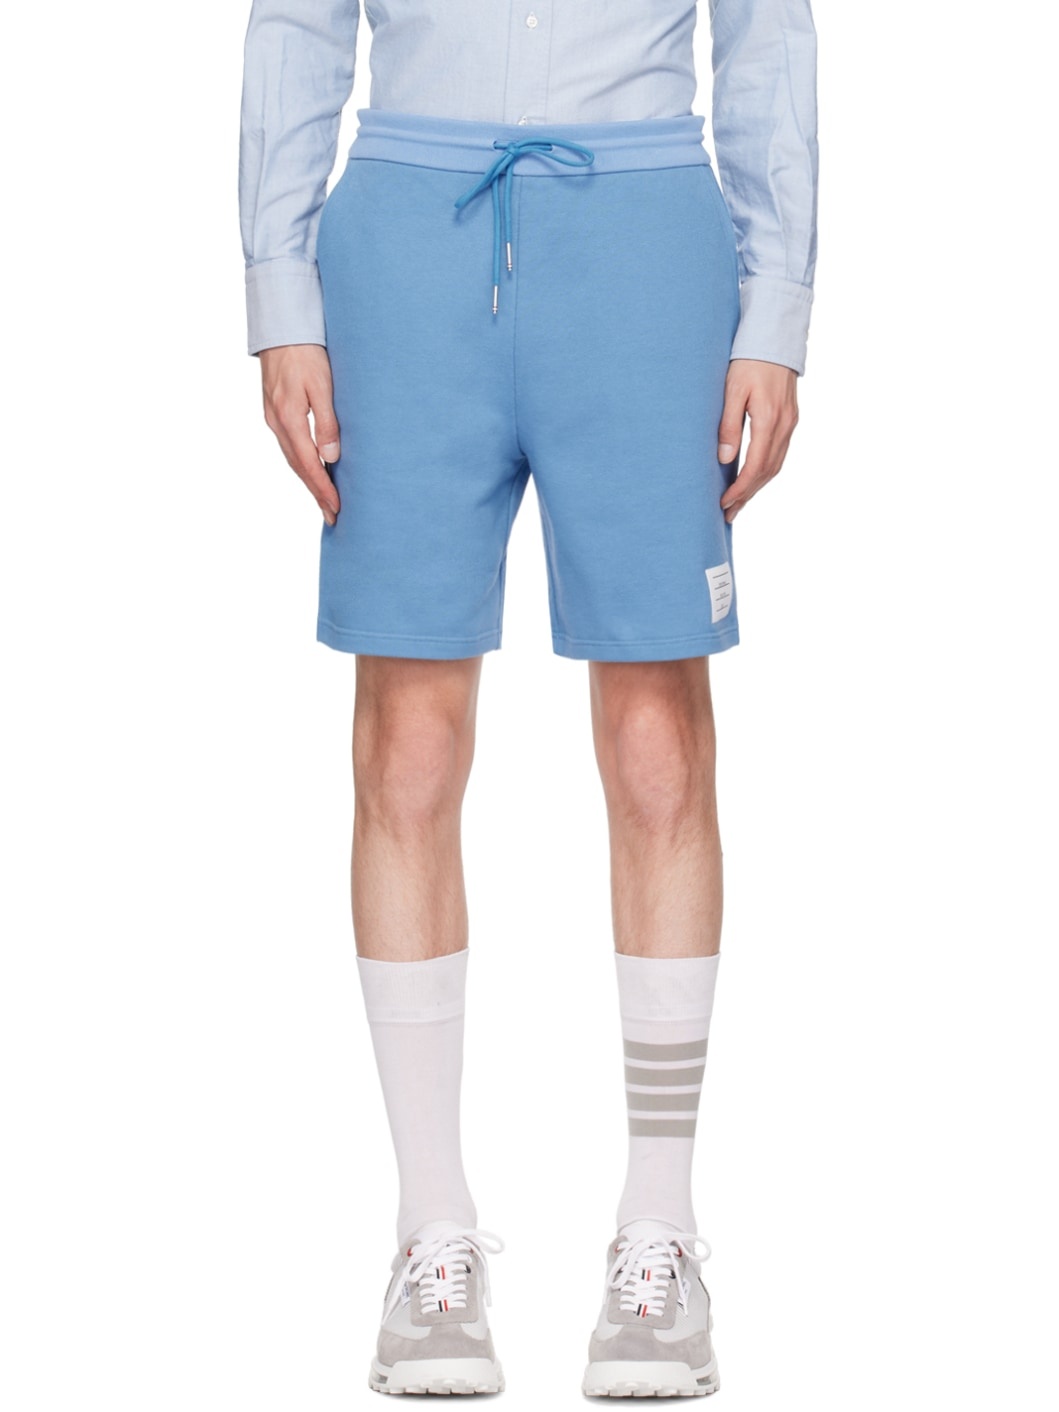 Blue Mid-Thigh Shorts - 1